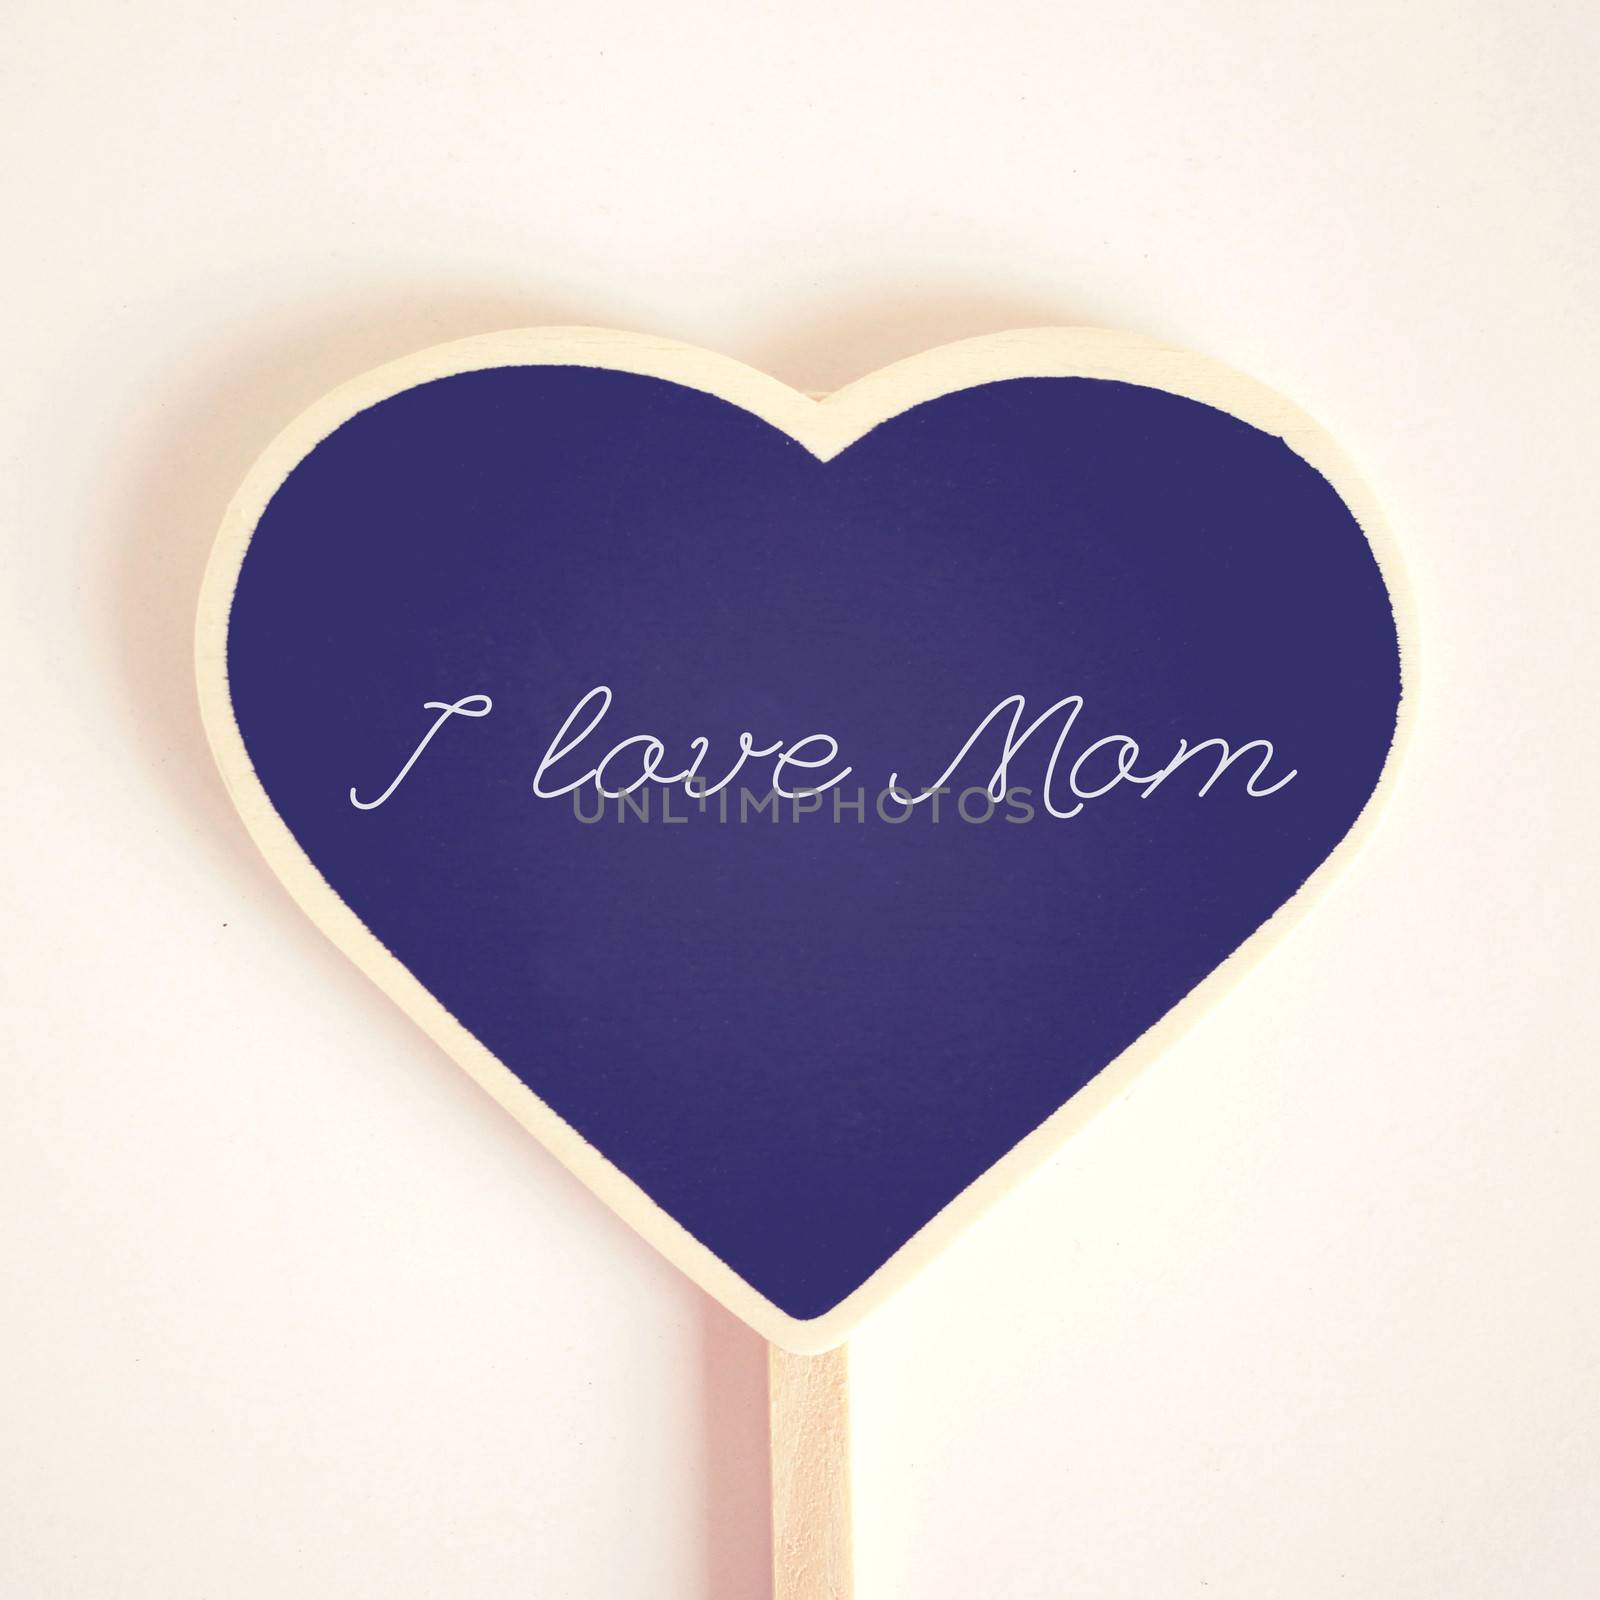 I love mom word on heart shaped blackboard, retro filter effect 